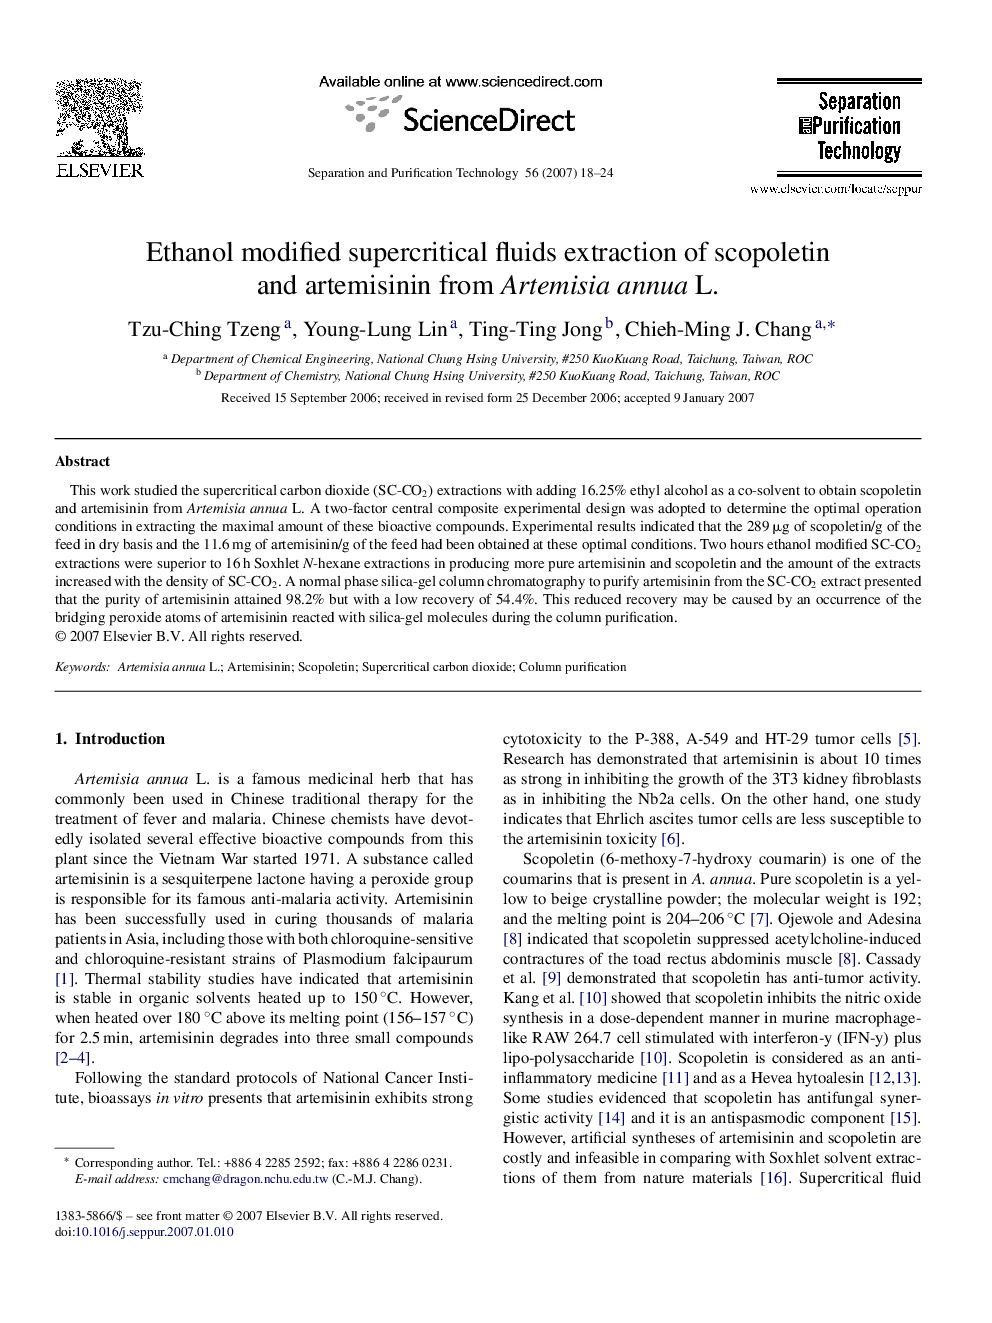 Ethanol modified supercritical fluids extraction of scopoletin and artemisinin from Artemisia annua L.